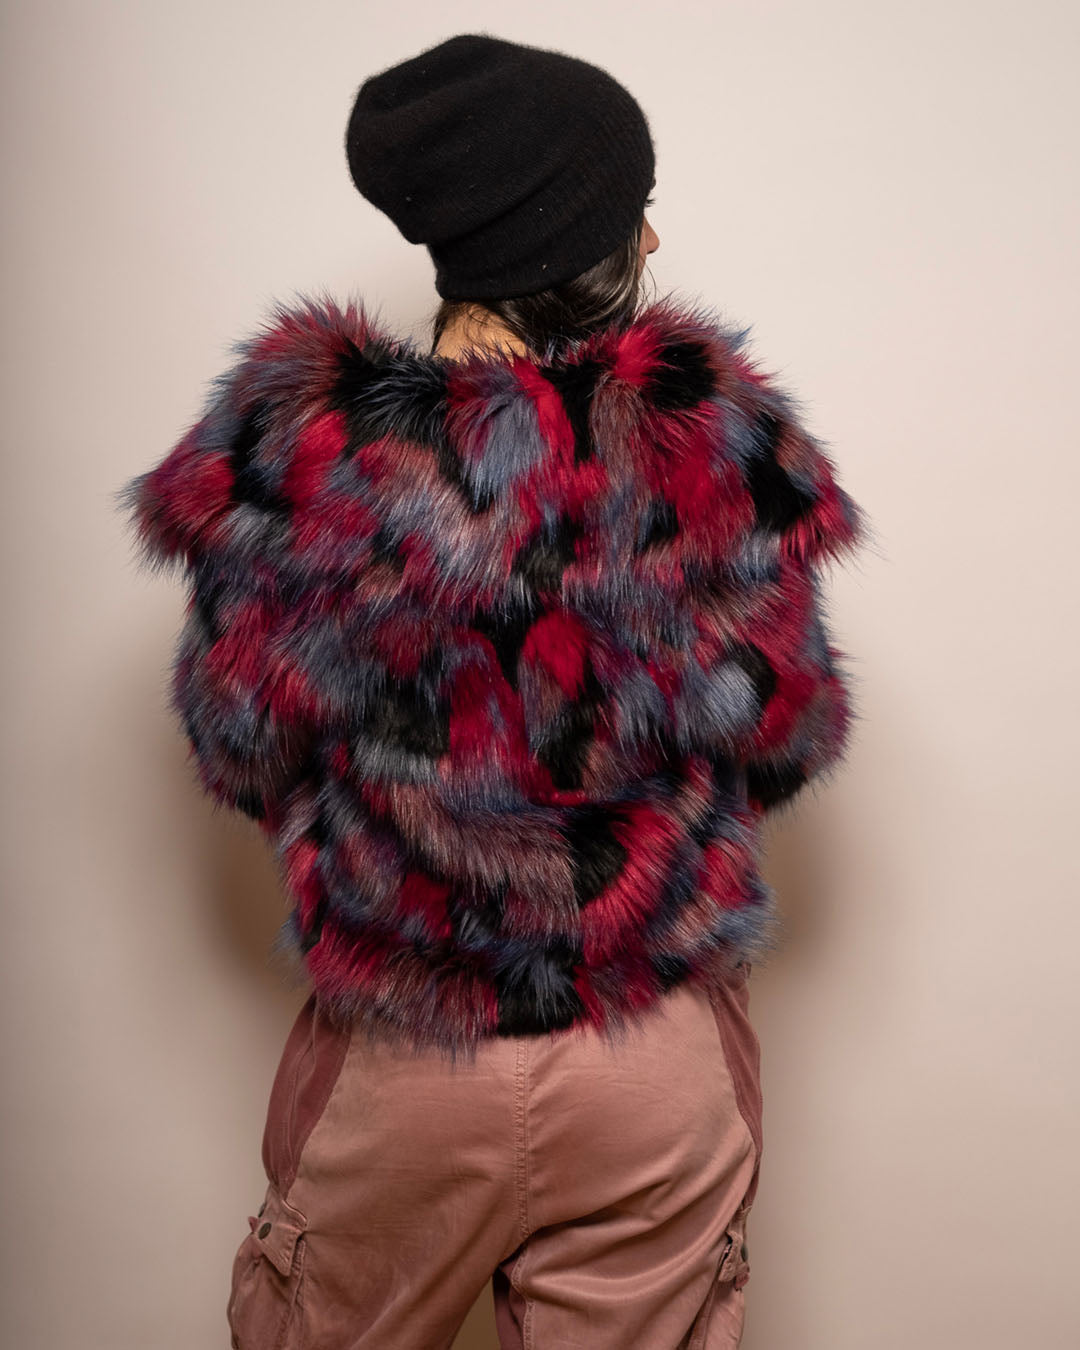 Crimson Kitty Collared Collector Edition Faux Fur Waist Jacket | Women's